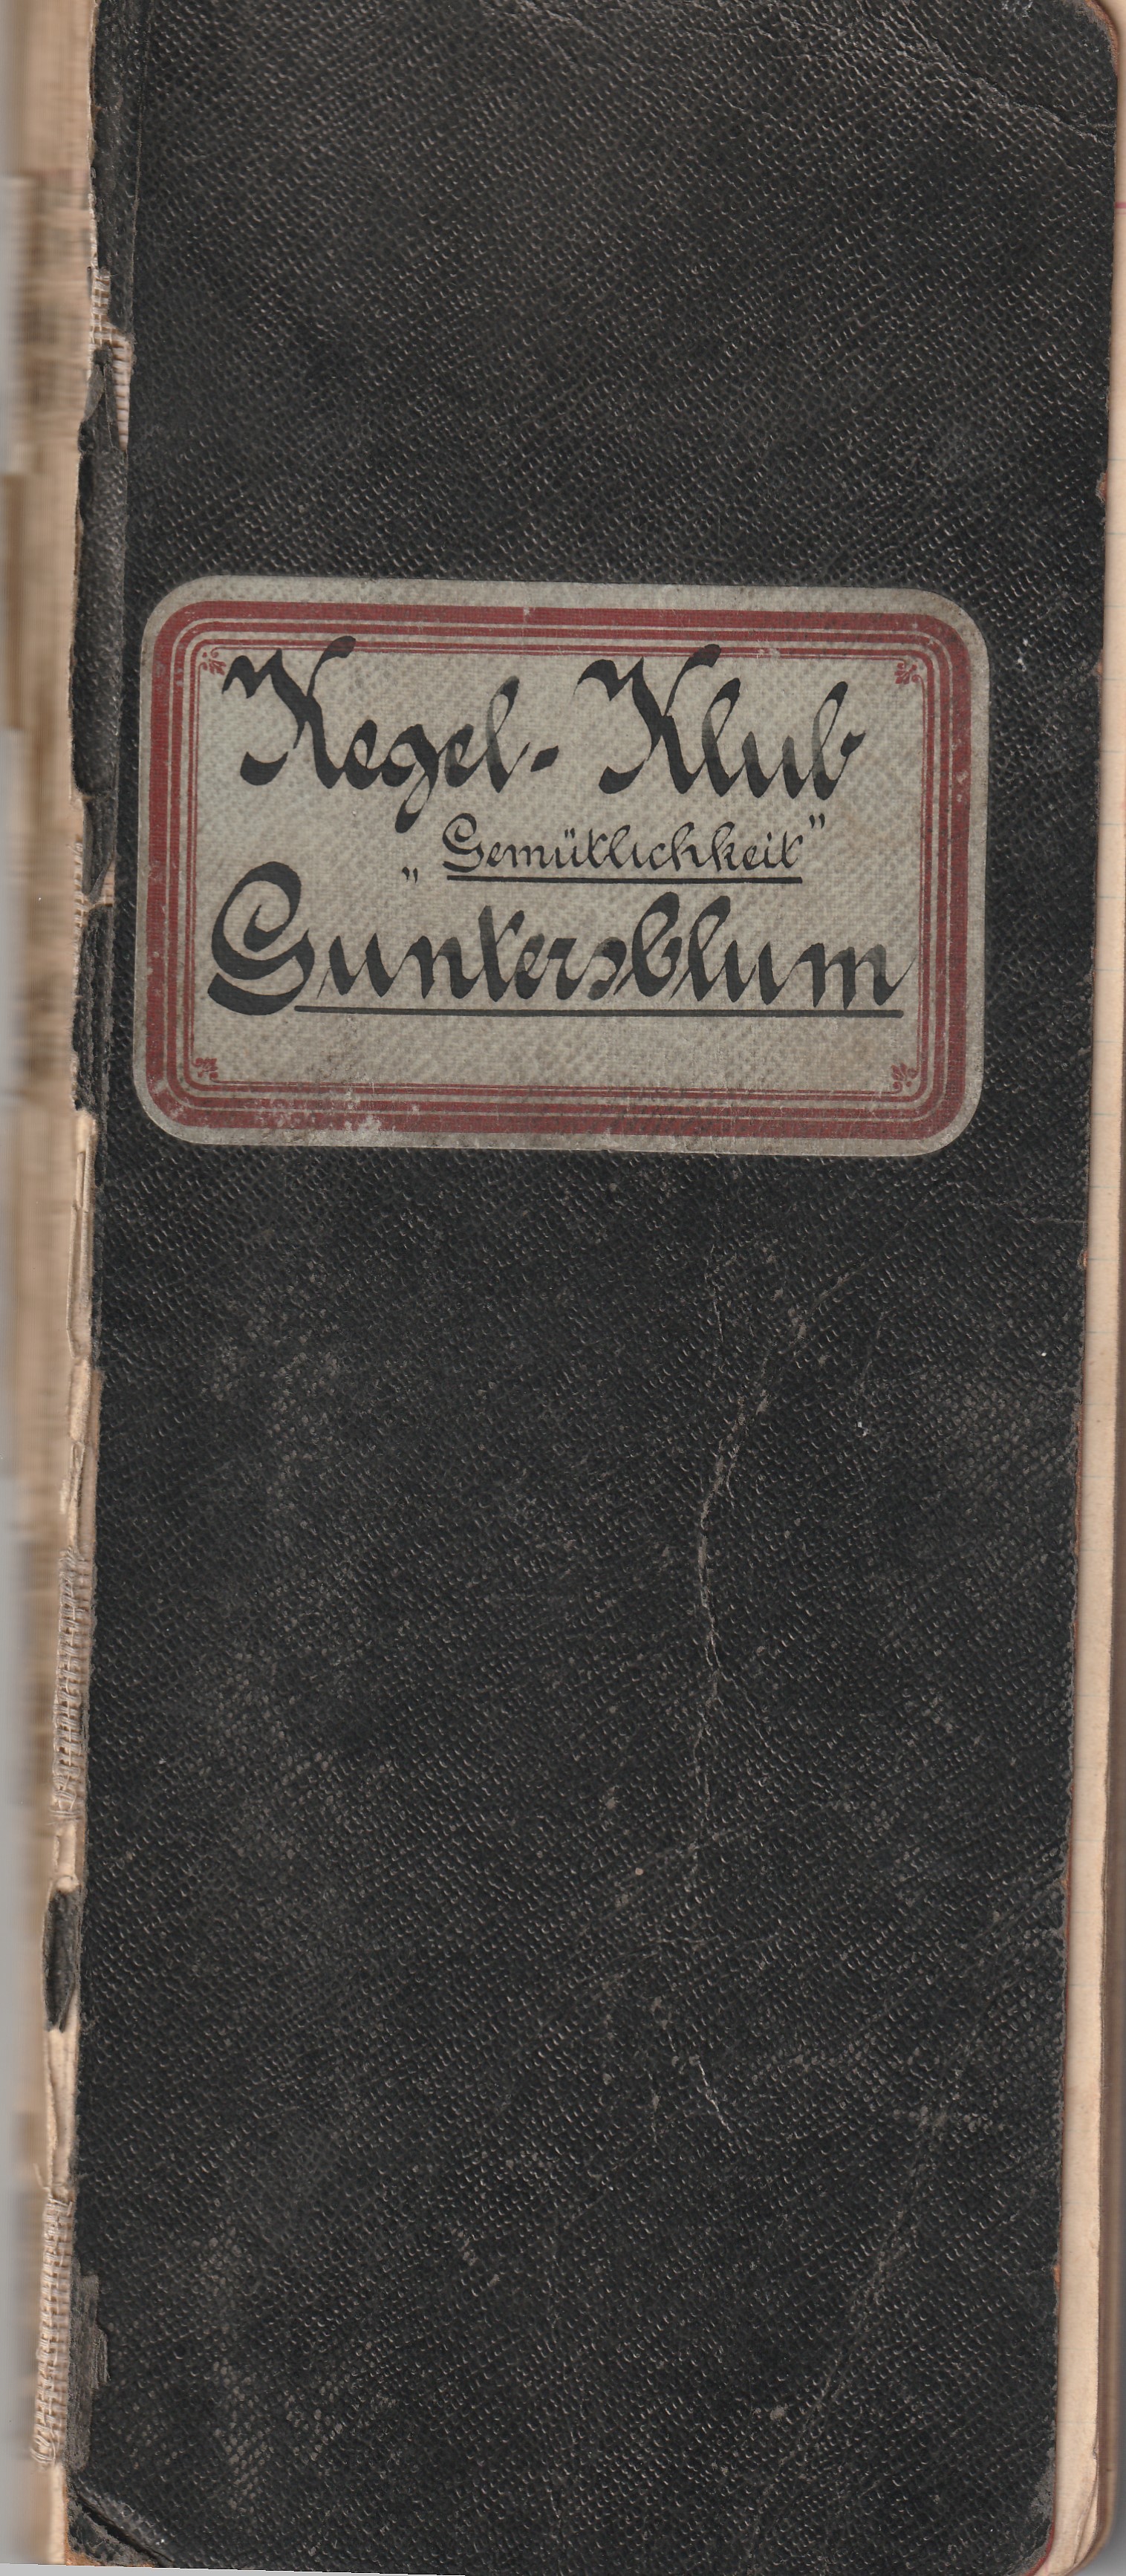 Kassenbuch Kegel-Klub "Gemütlichkeit" 1927 - 1931 (Museum Guntersblum  im Kellerweg 20 CC BY-NC-SA)